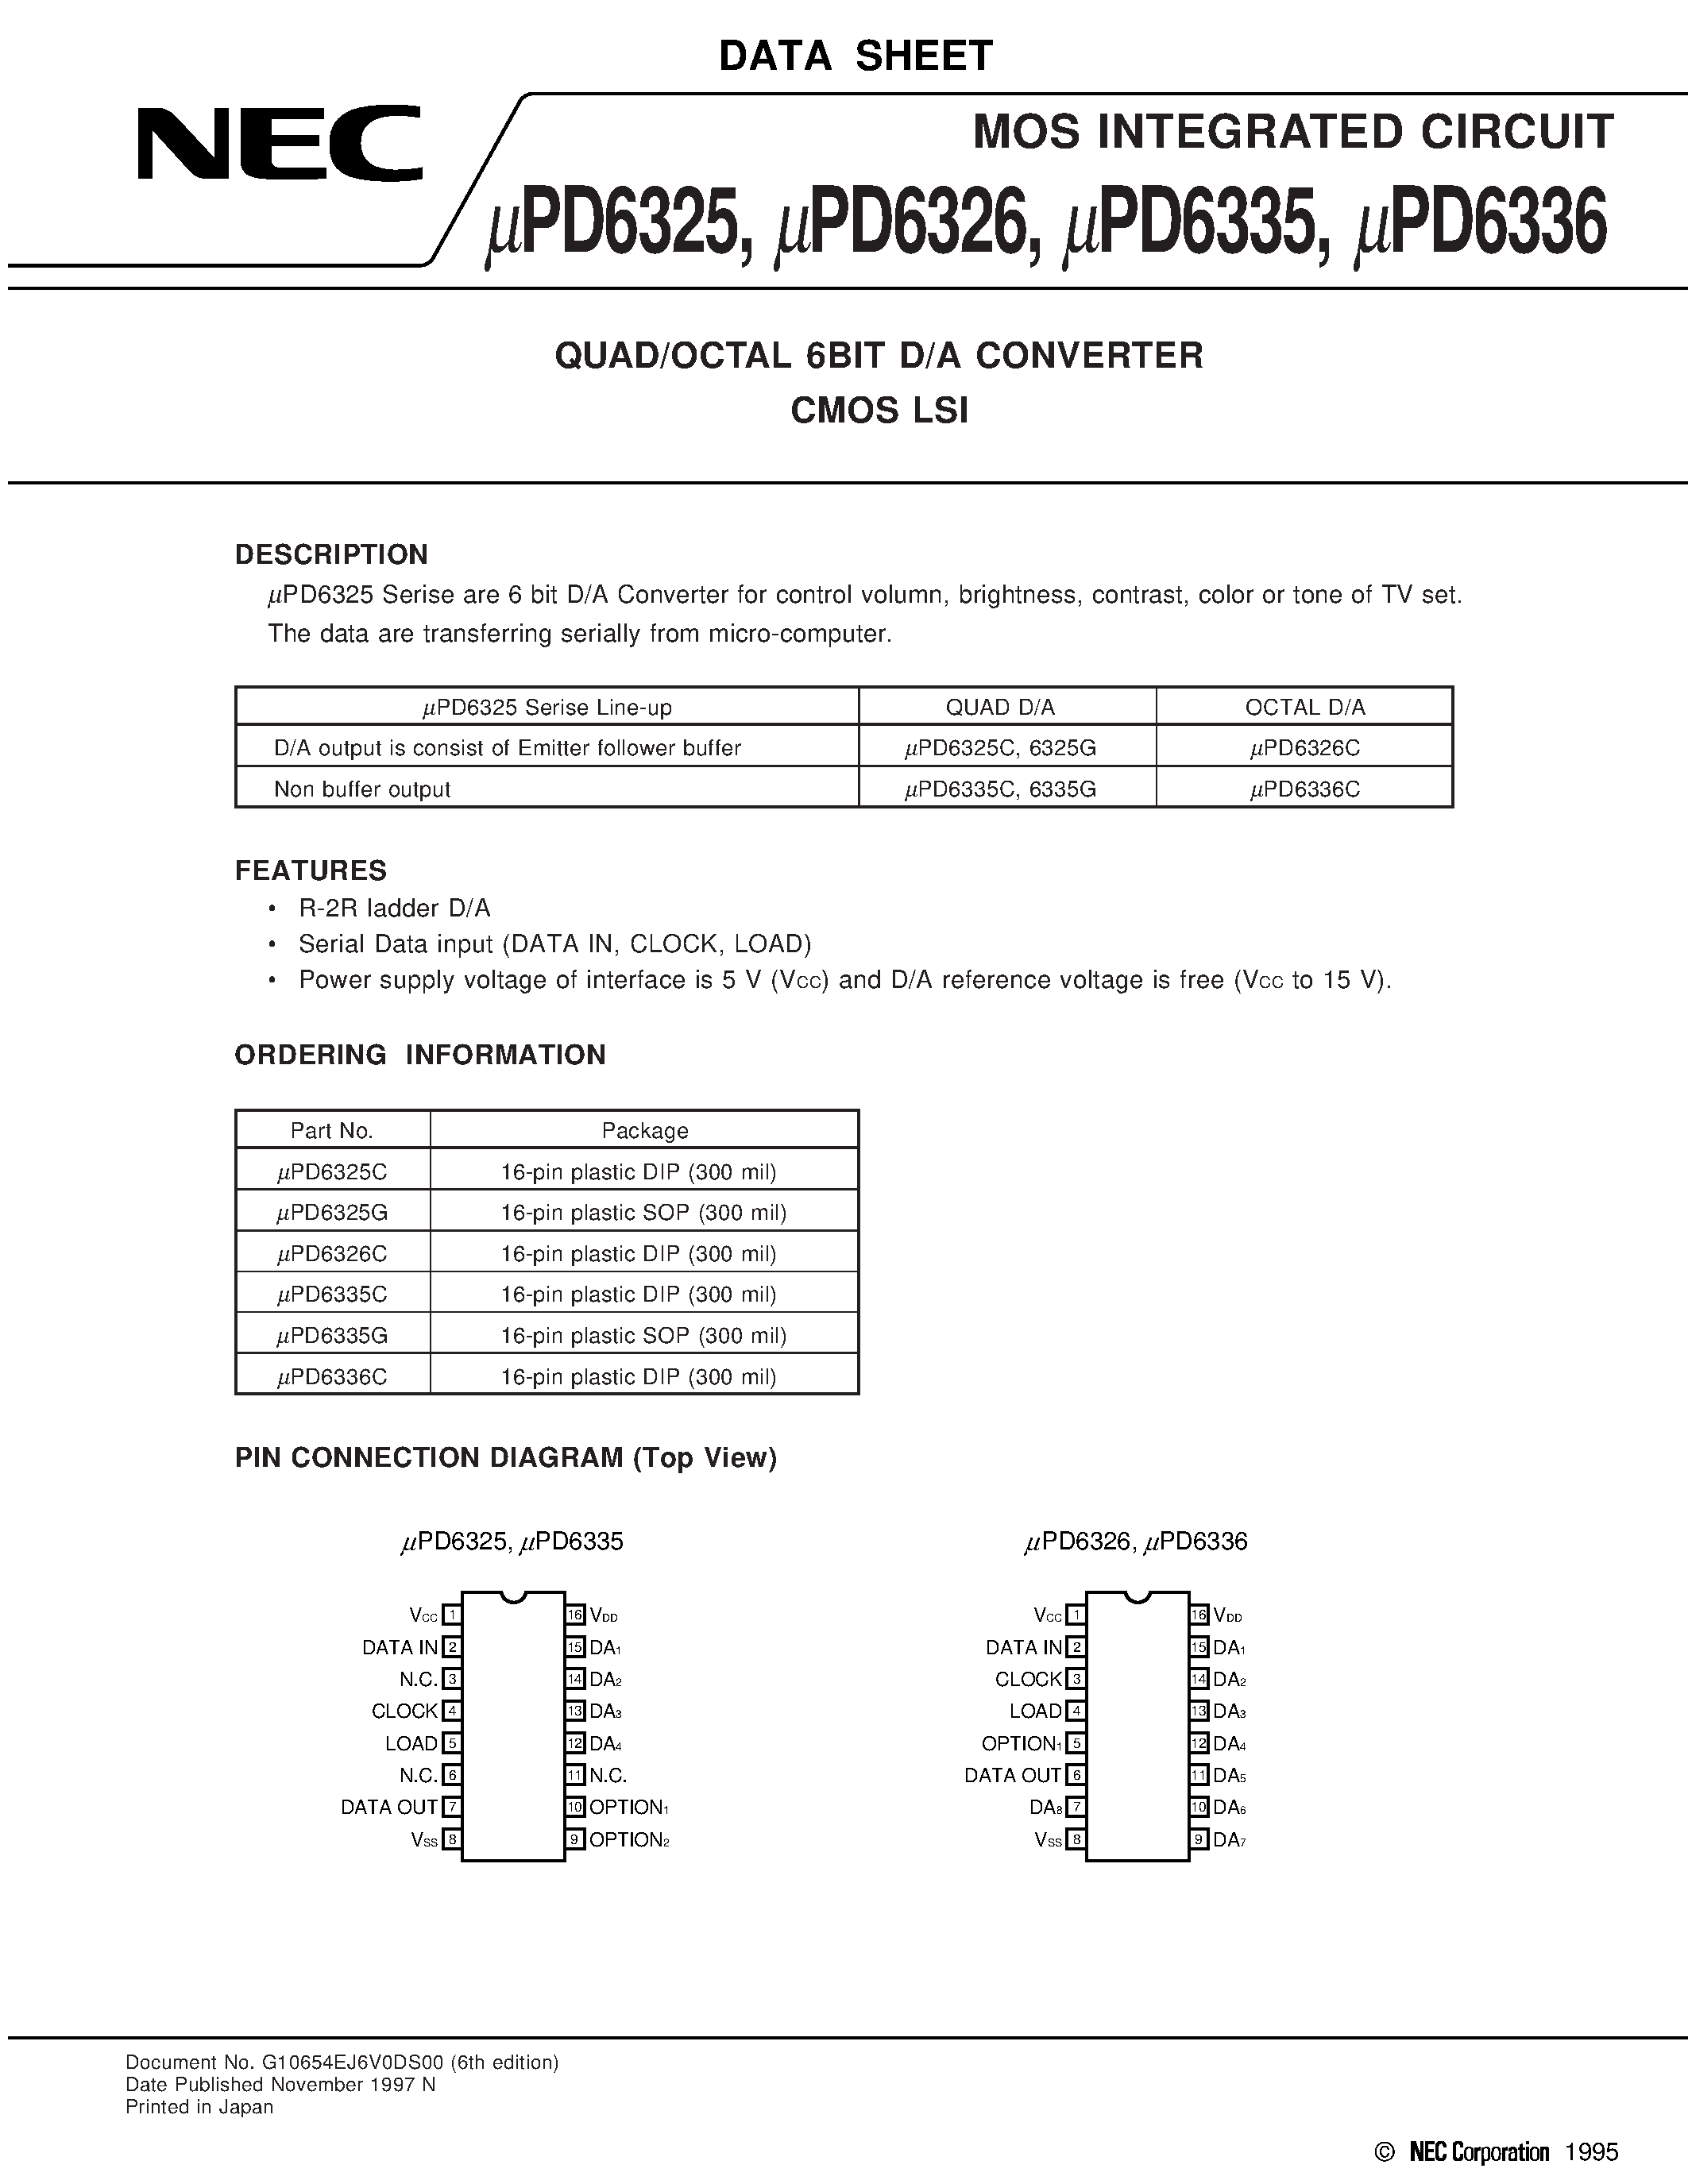 Даташит UPD6336 - QUAD/OCTAL 6BIT D/A CONVERTER CMOS LSI страница 1